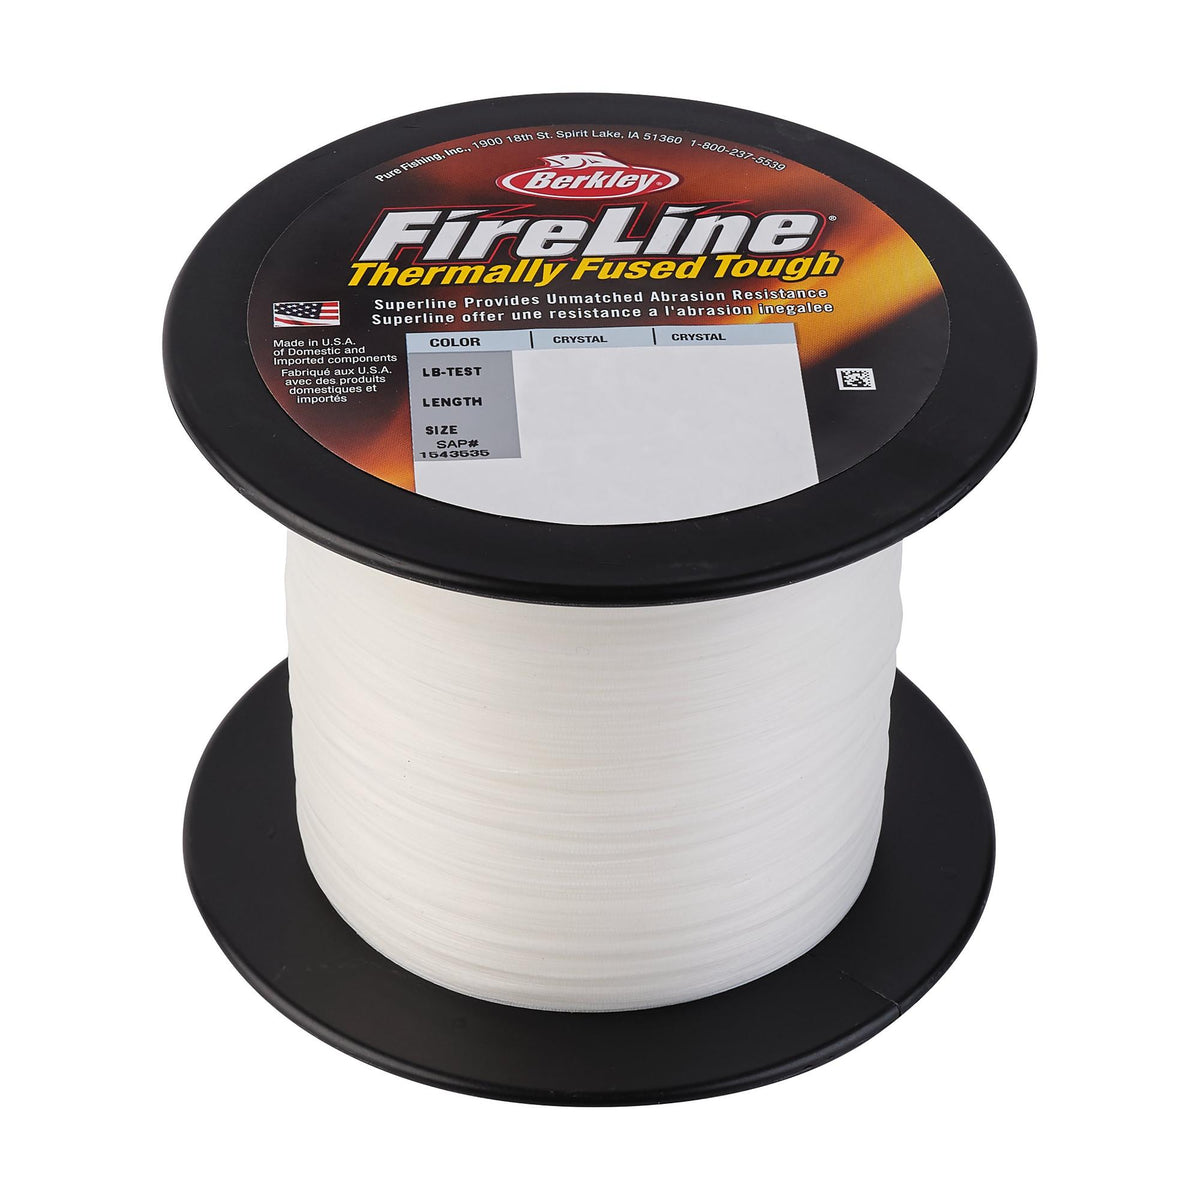 Berkley Fireline crystal 20LB fishing line spool for Sale in Grand